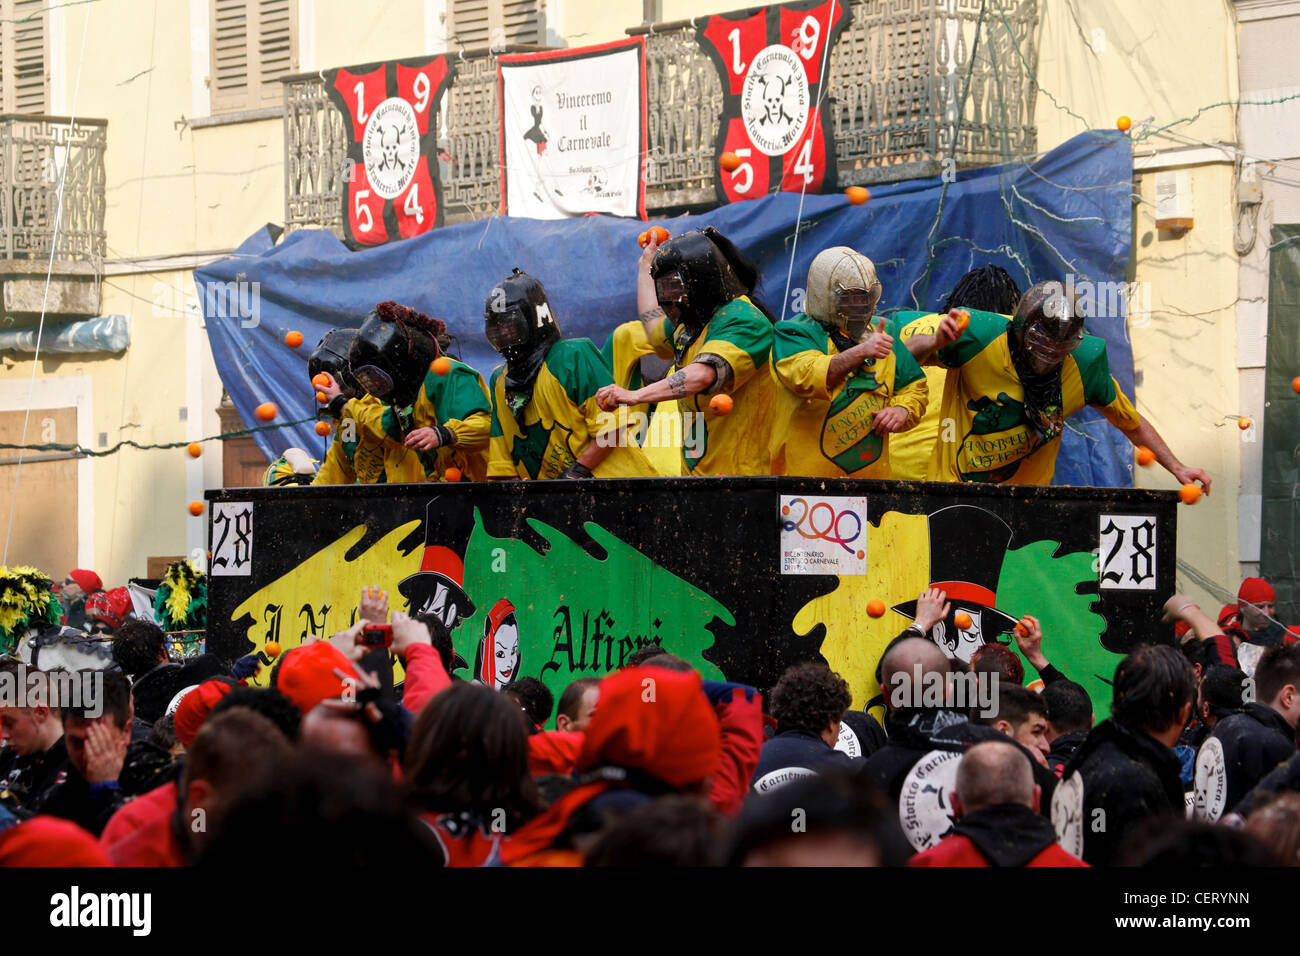 Crowds throwing oranges at the carriage during Ivrea Carnival's 'Battle of Oranges' (La battaglia delle arance) Stock Photo